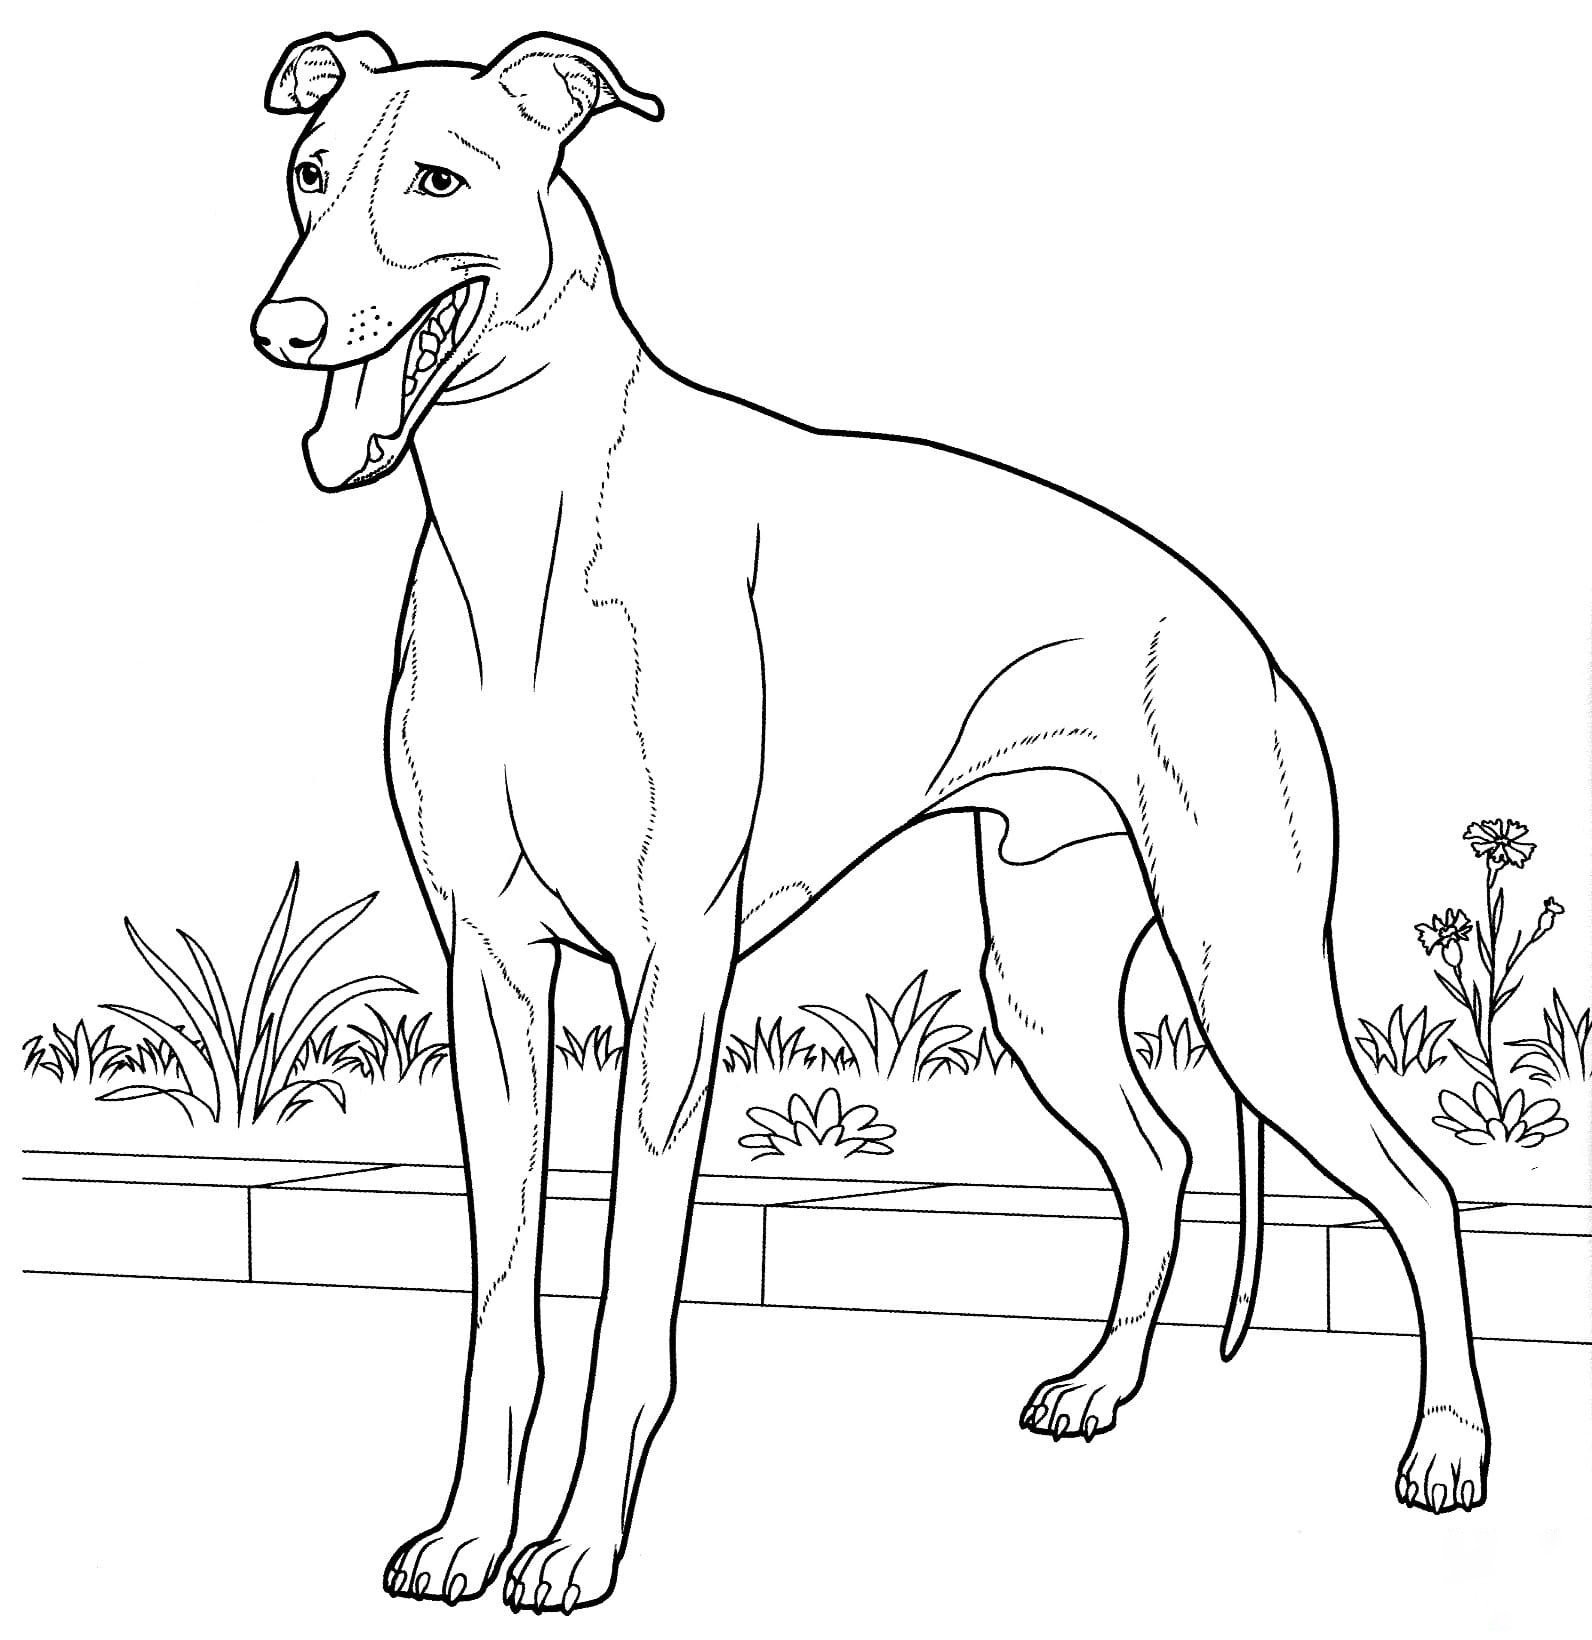 Italian Greyhound from Dogs